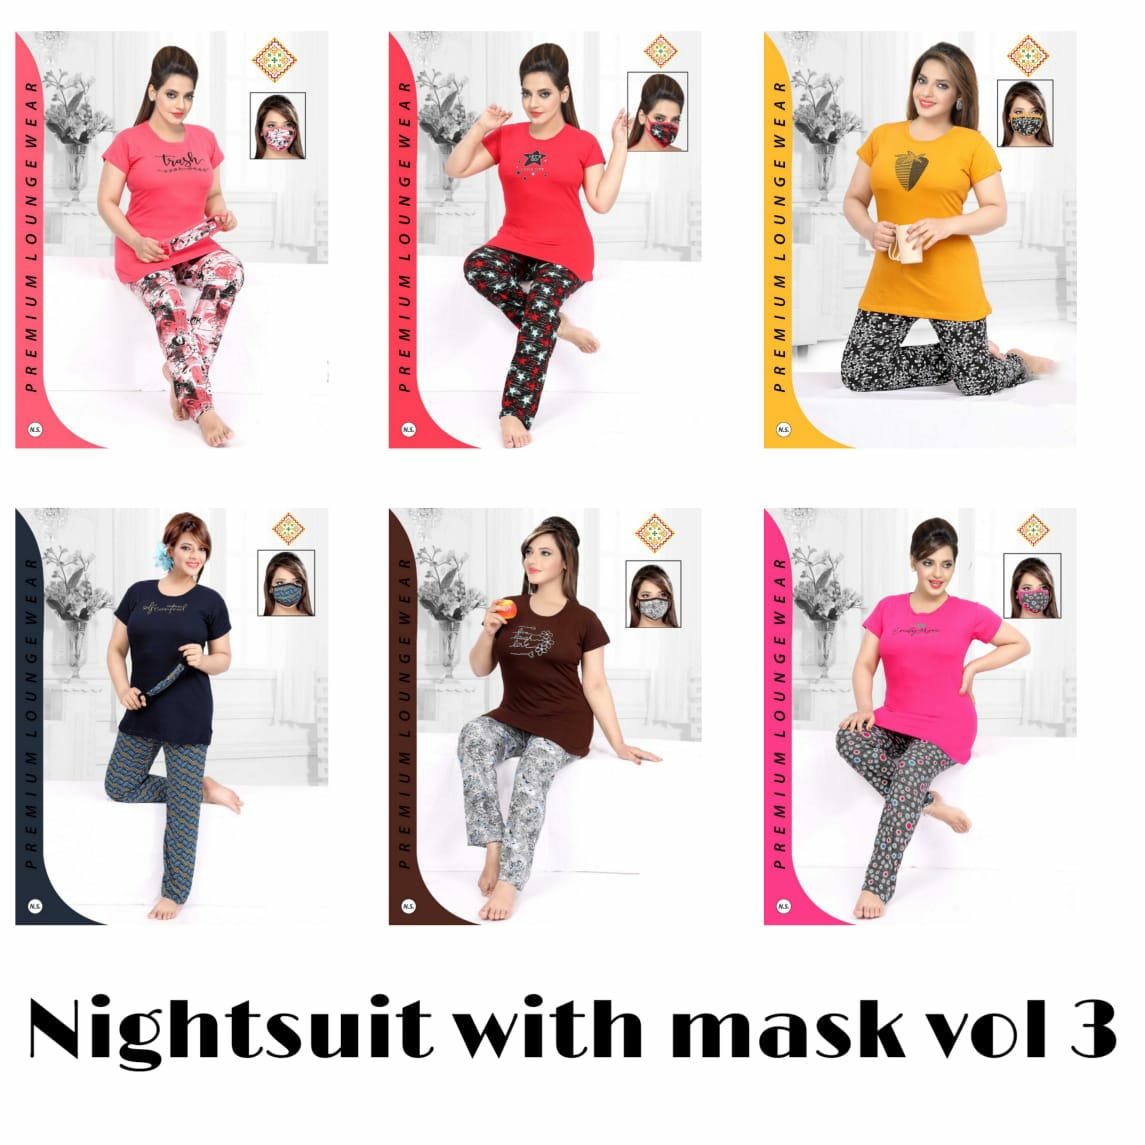 gaabha nightsuit with mask vol 3 Hosiery Comfort night wear catalog